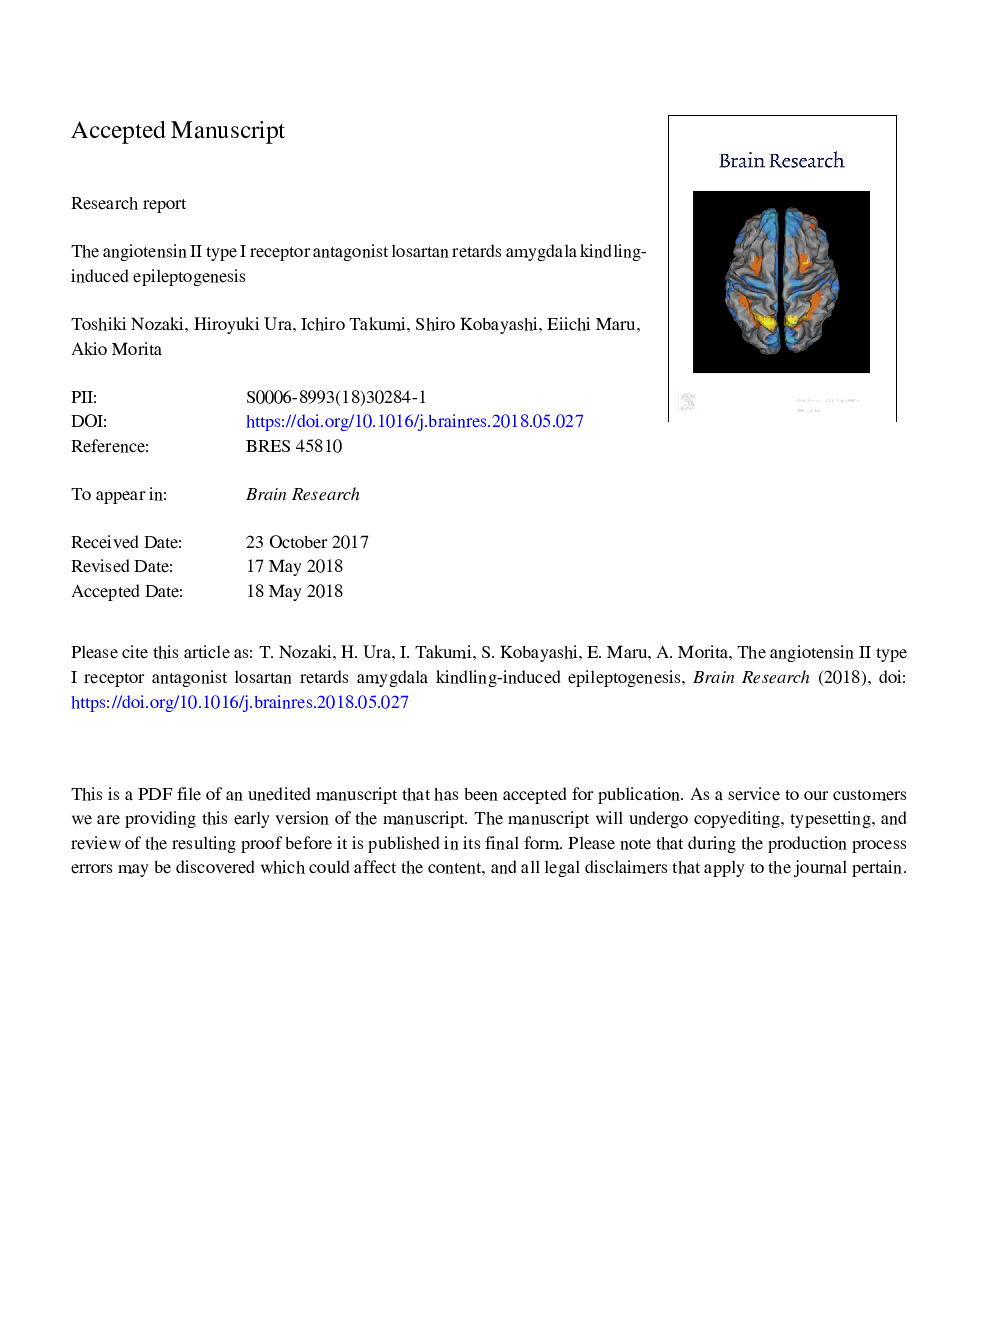 The angiotensin II type I receptor antagonist losartan retards amygdala kindling-induced epileptogenesis